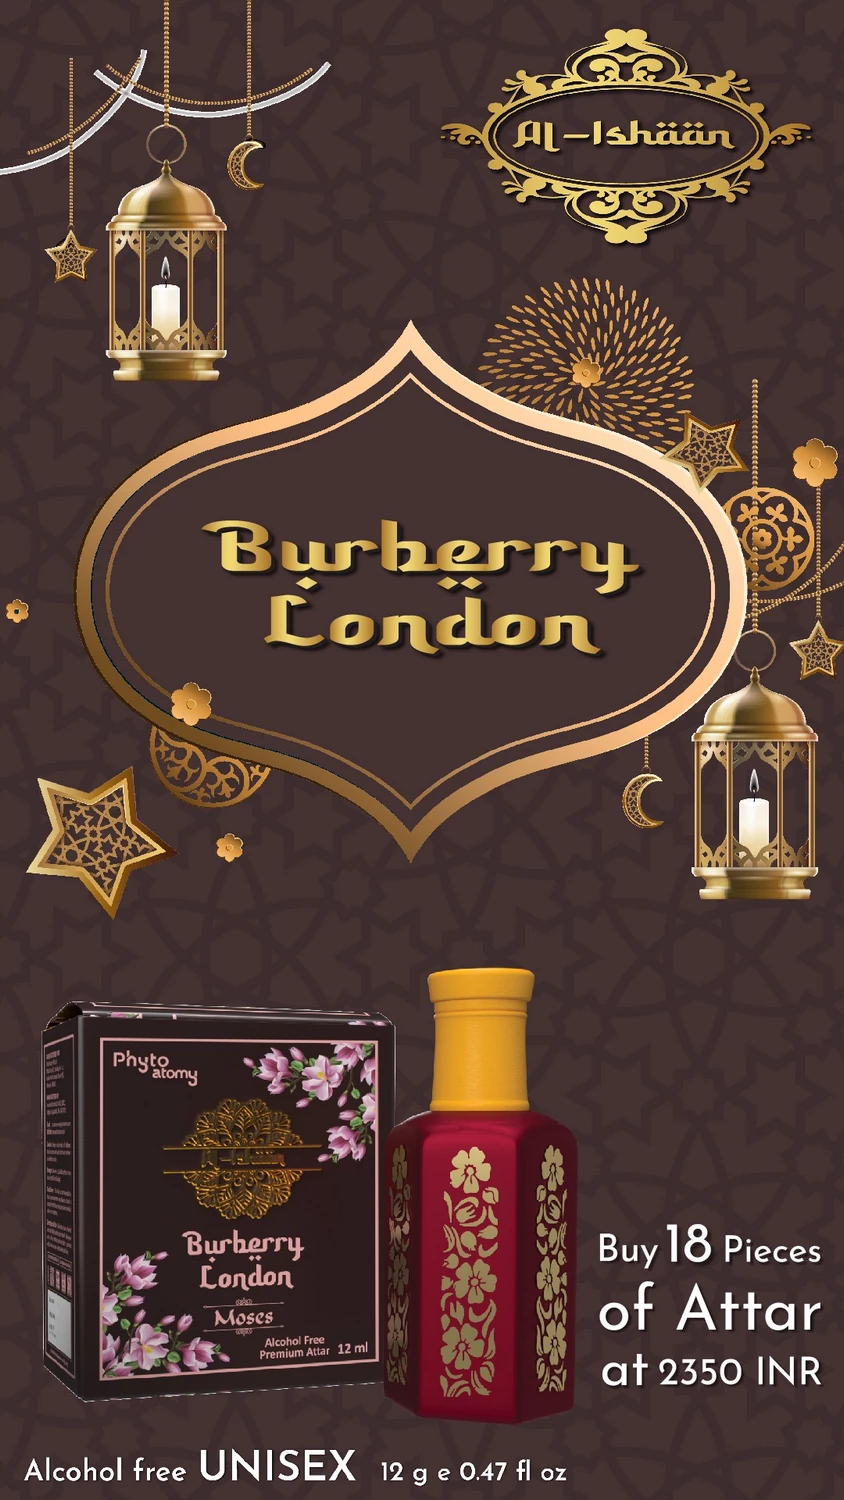 SCBV B2B Al Ishan Burberry London Attar (12ml)-18 Pcs.